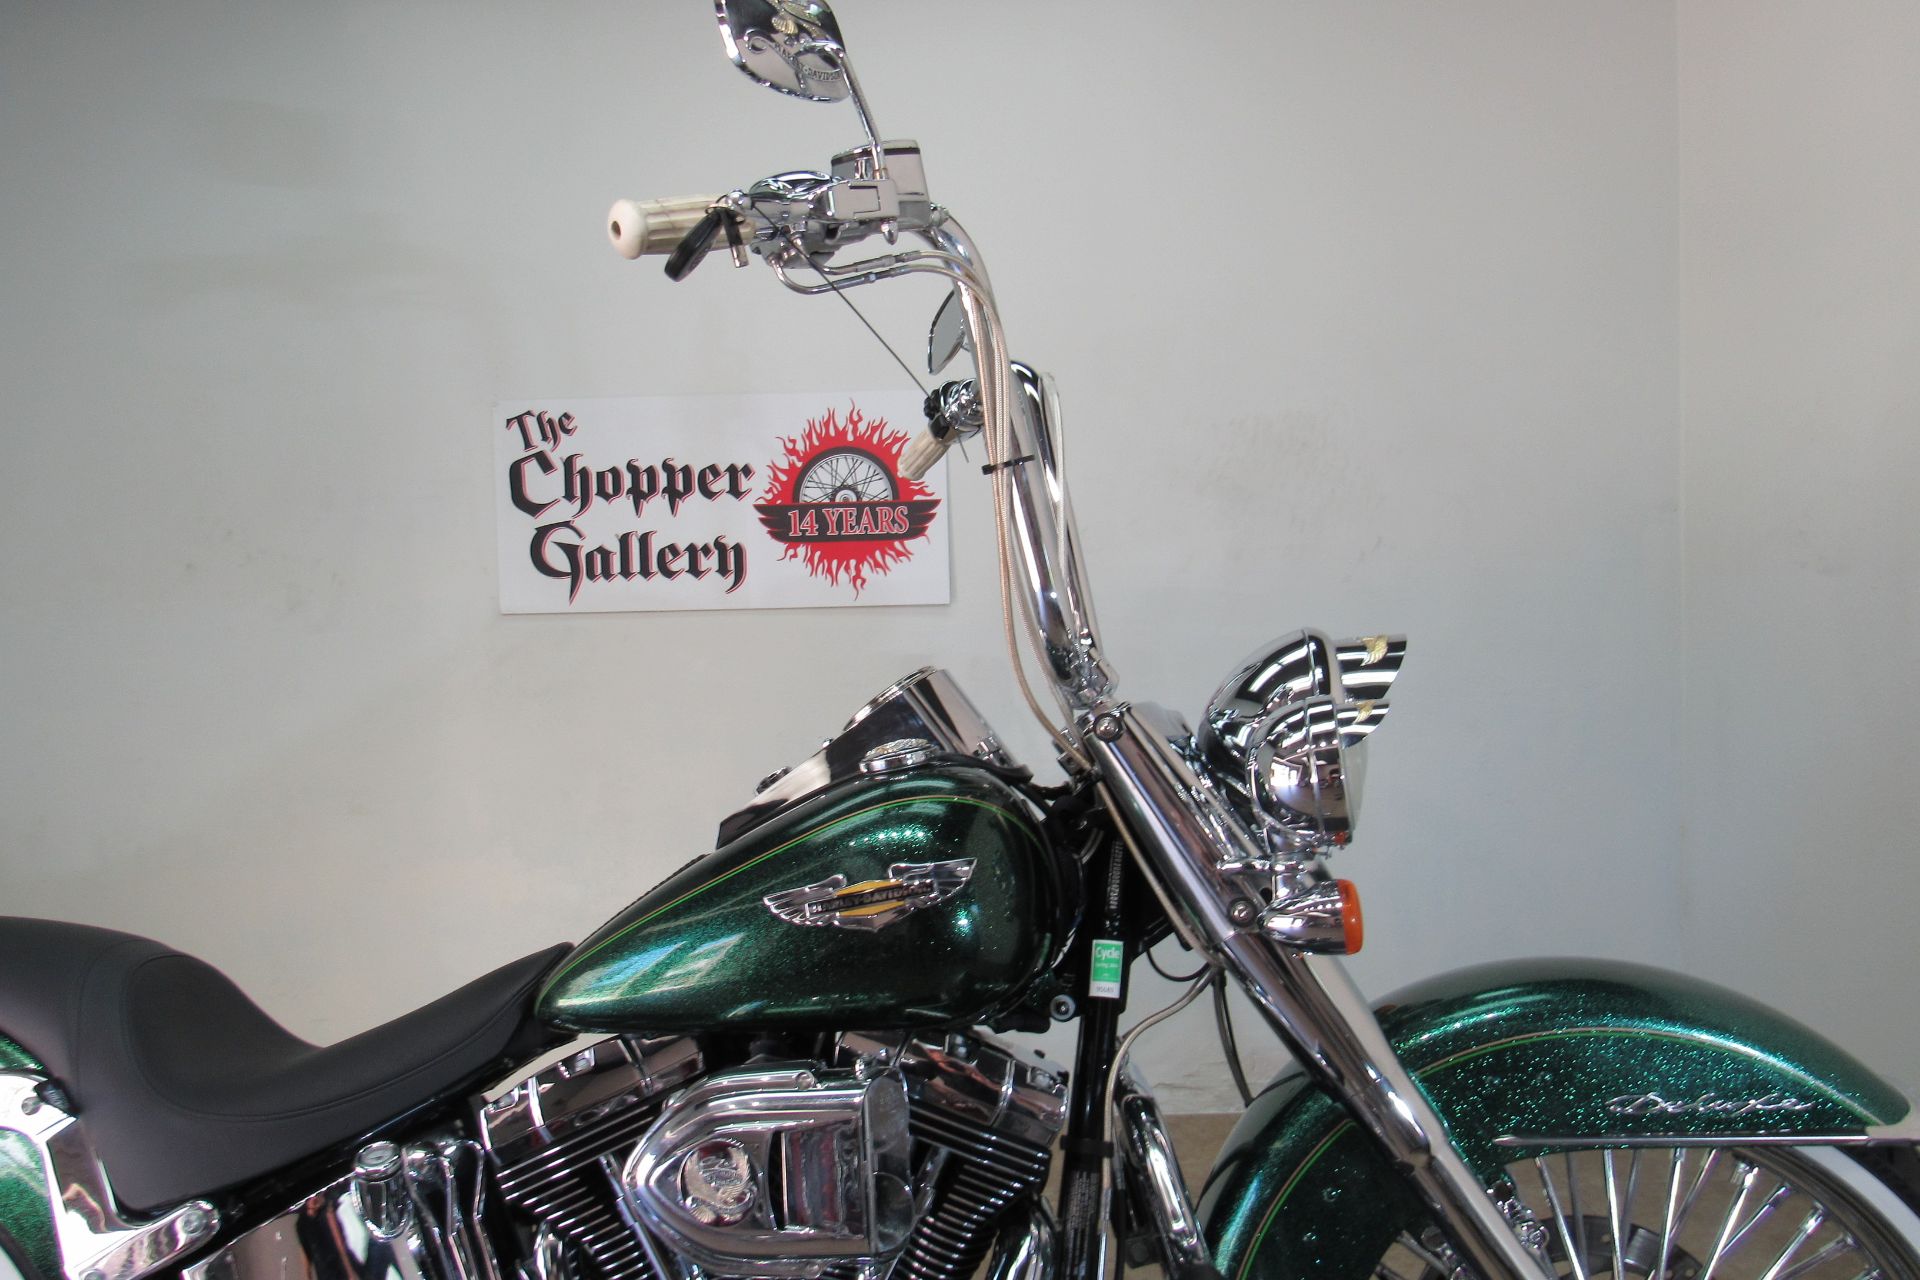 2013 Harley-Davidson Softail® Deluxe in Temecula, California - Photo 9